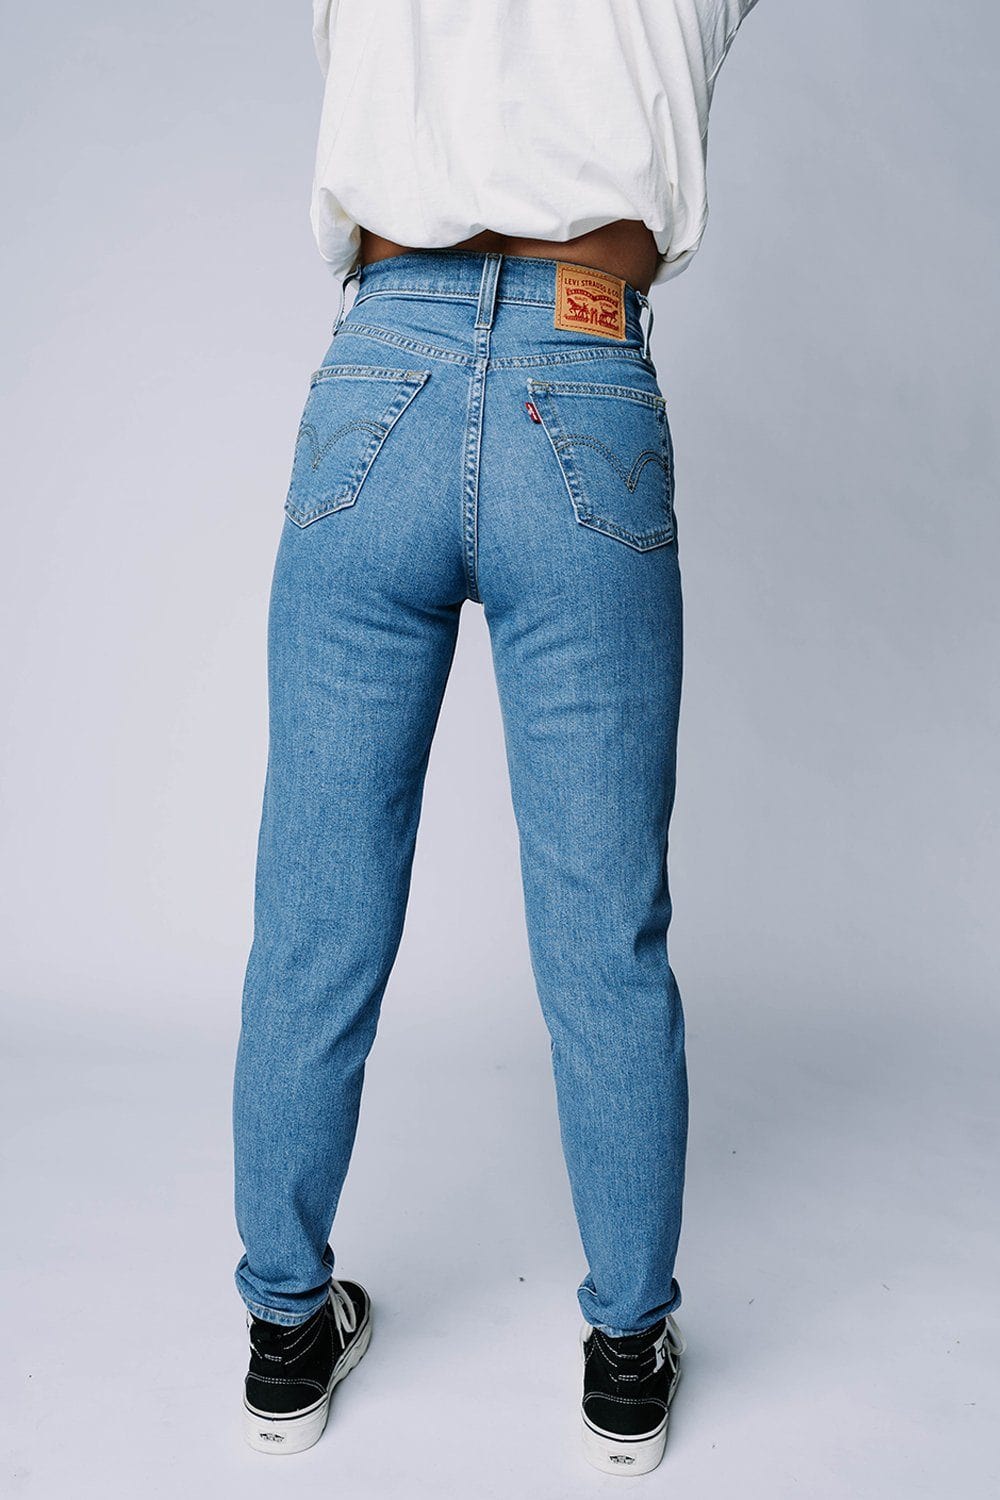 levis taper jeans